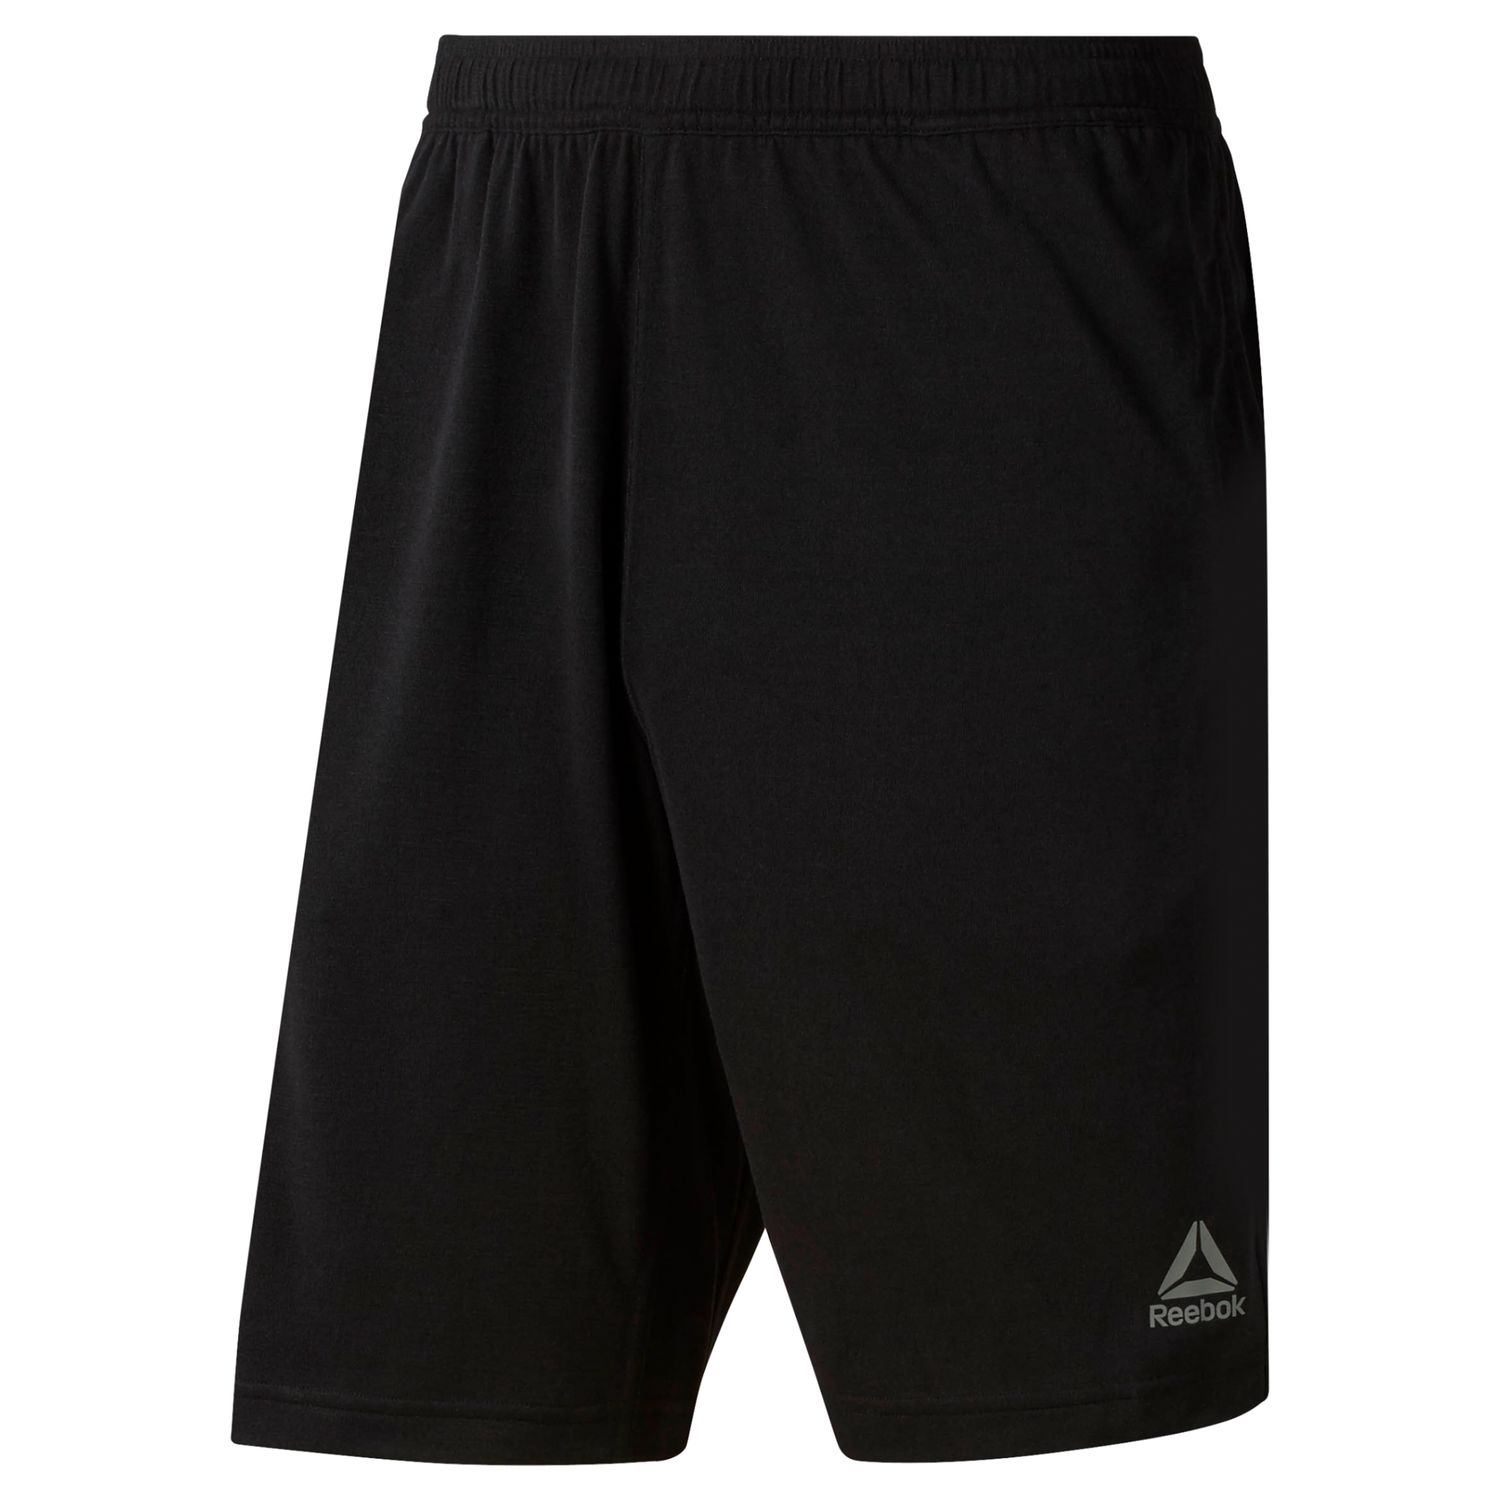 reebok athletic shorts